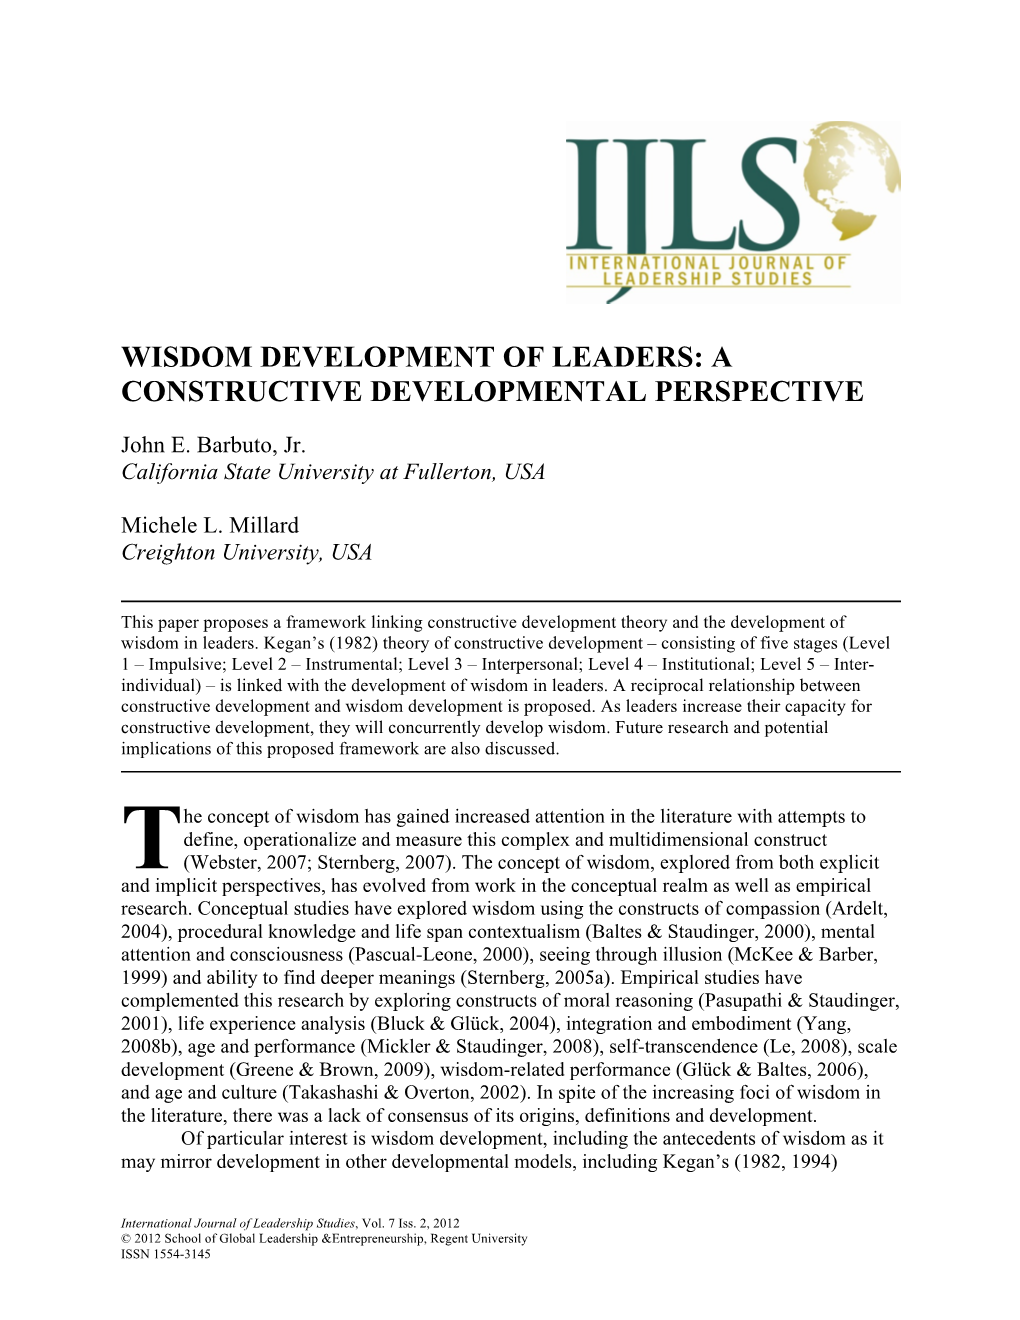 Wisdom Development of Leaders: a Constructive Developmental Perspective